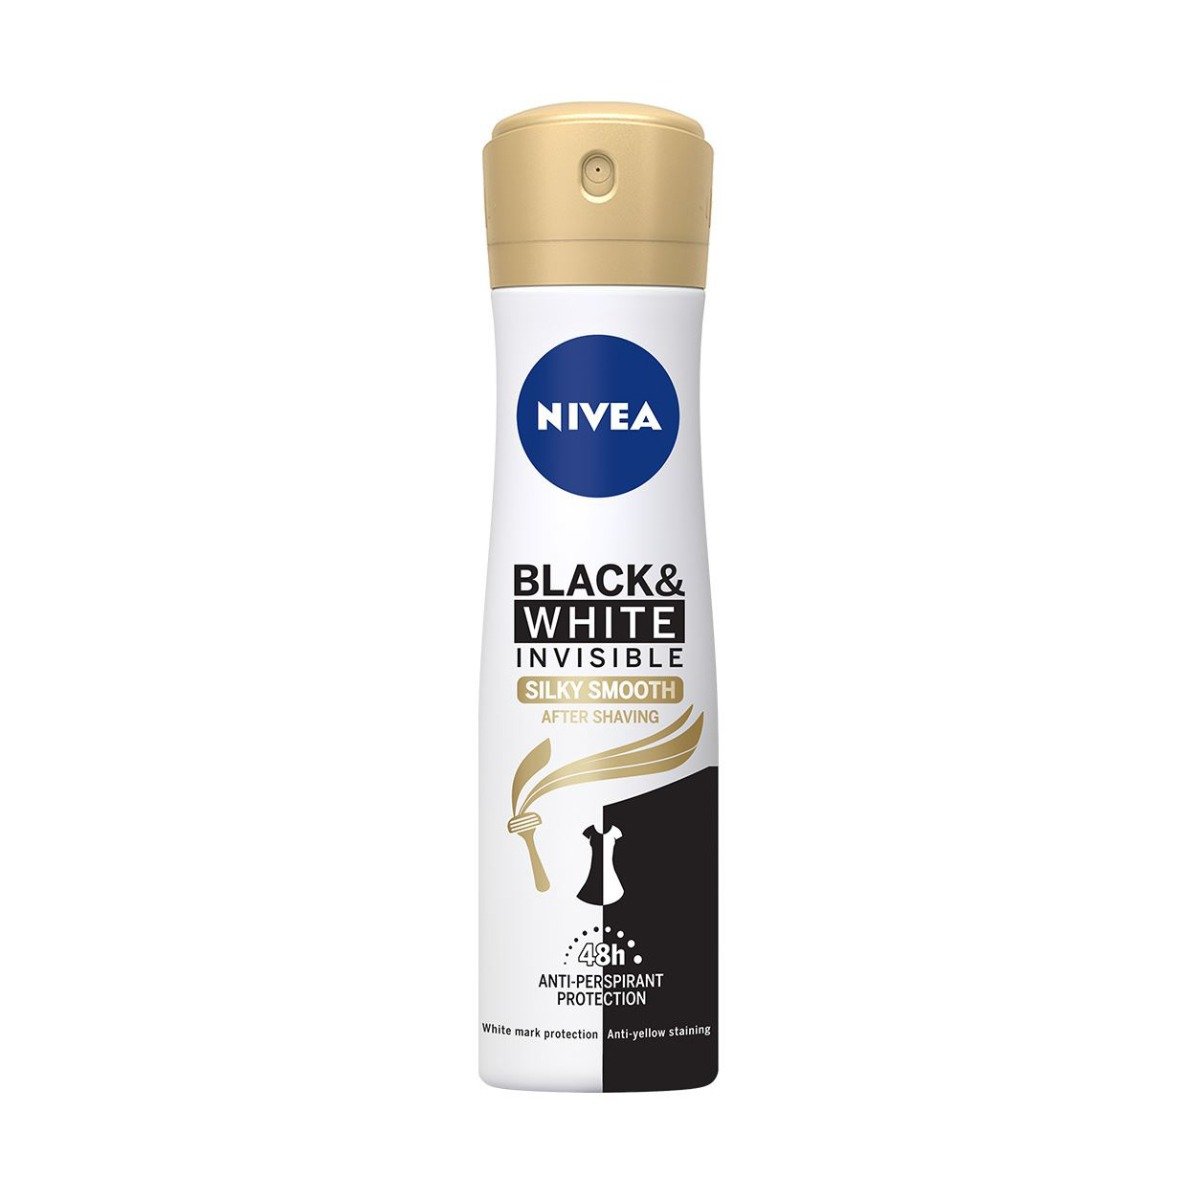 Nivea Black & White Invisible Silky Smooth Deodorant Spray - 150ml - Bloom Pharmacy